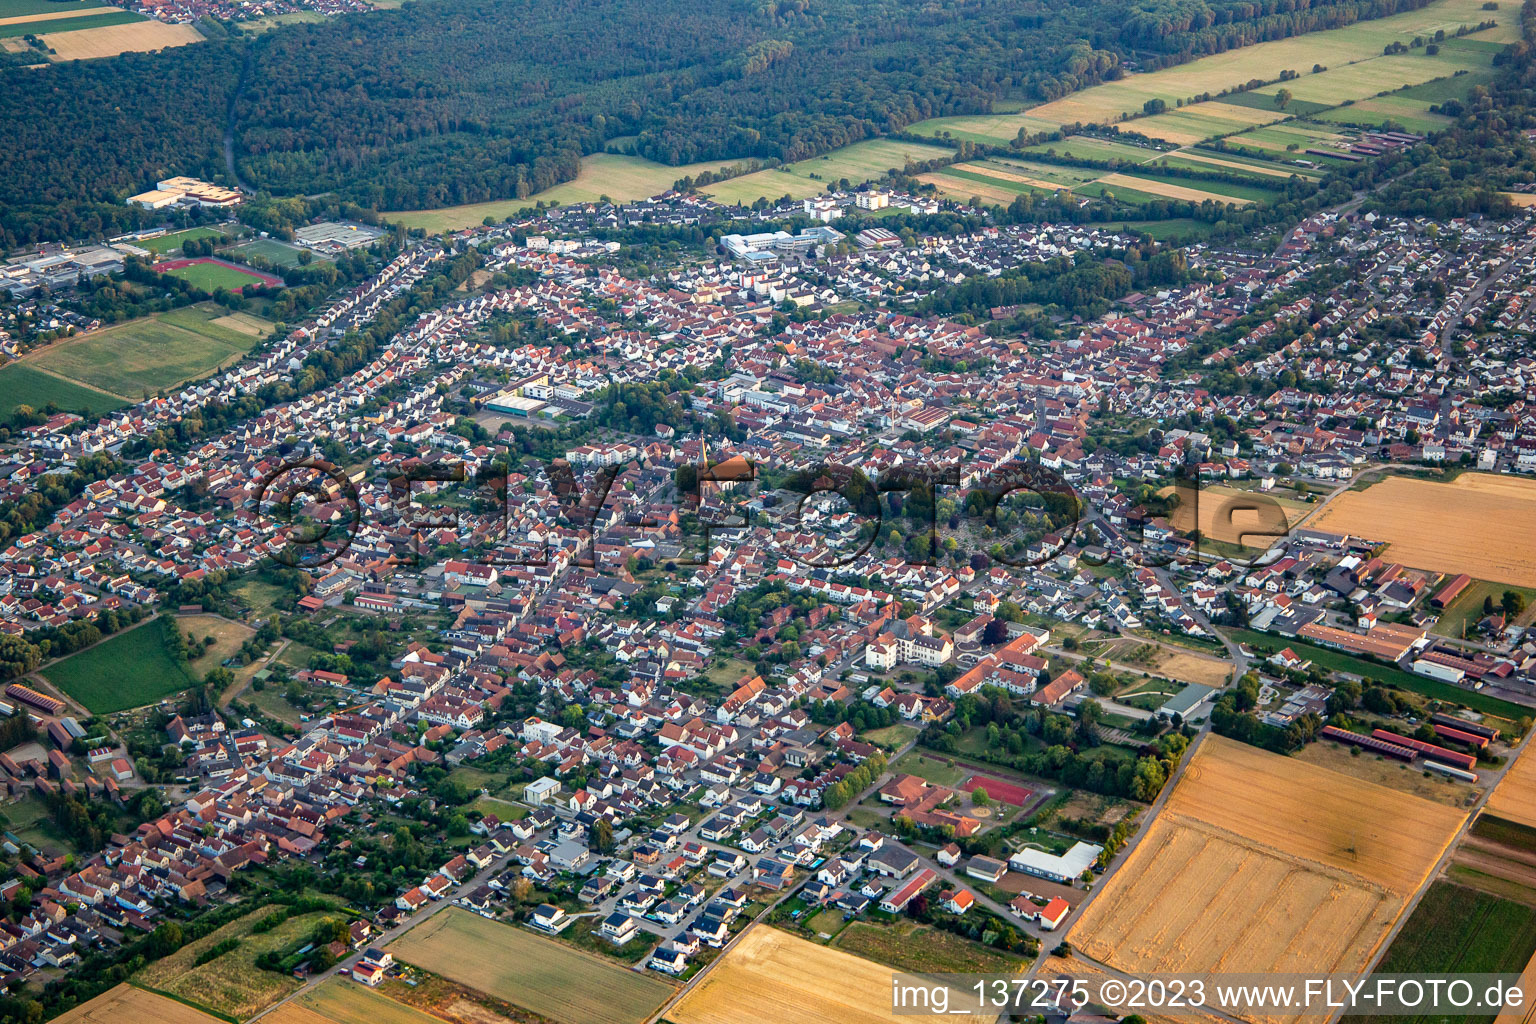 From the northeast in Herxheim bei Landau in the state Rhineland-Palatinate, Germany